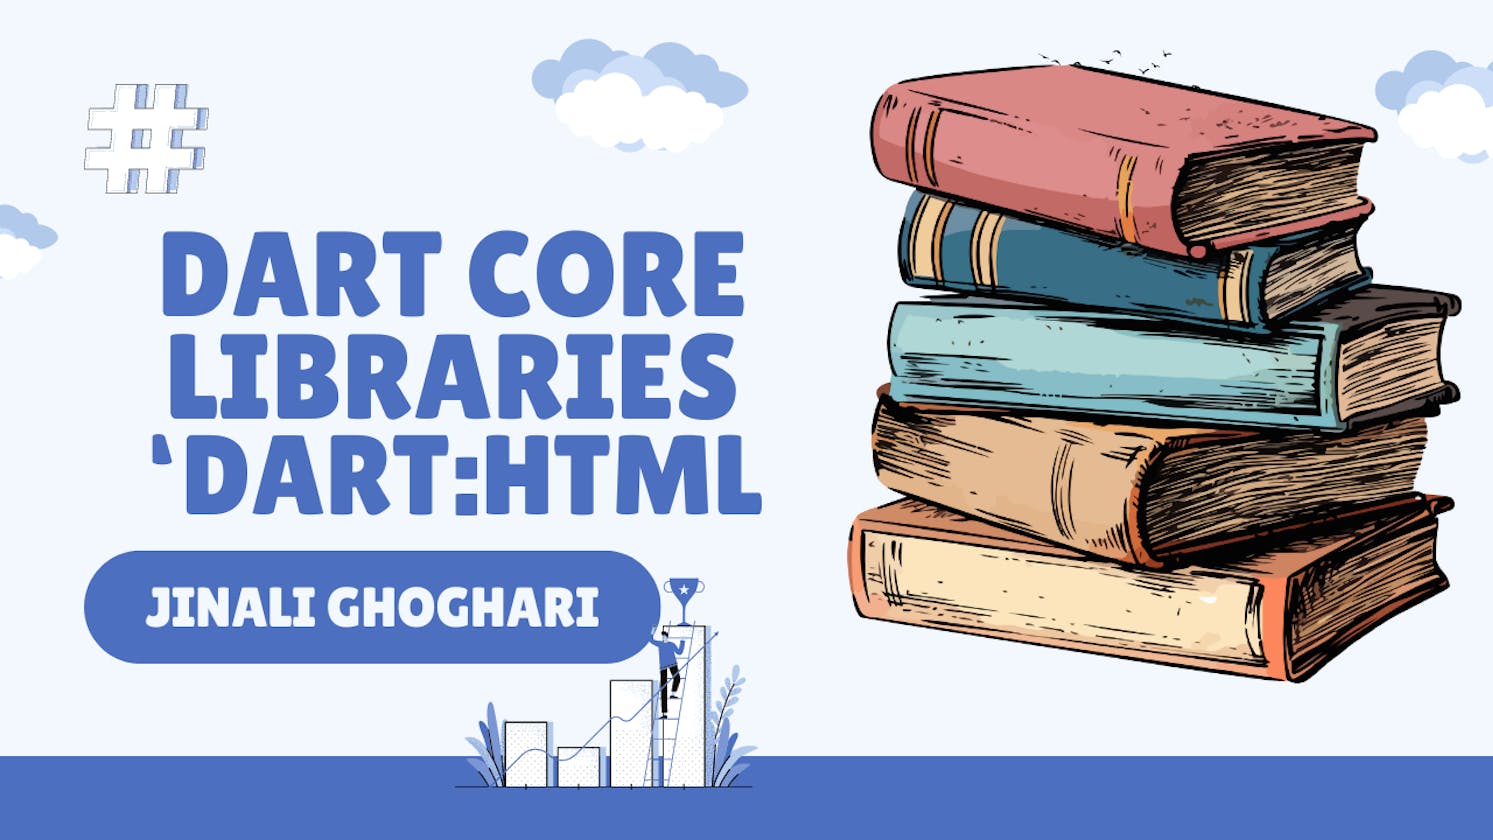 Dart Core Libraries 'dart:html'